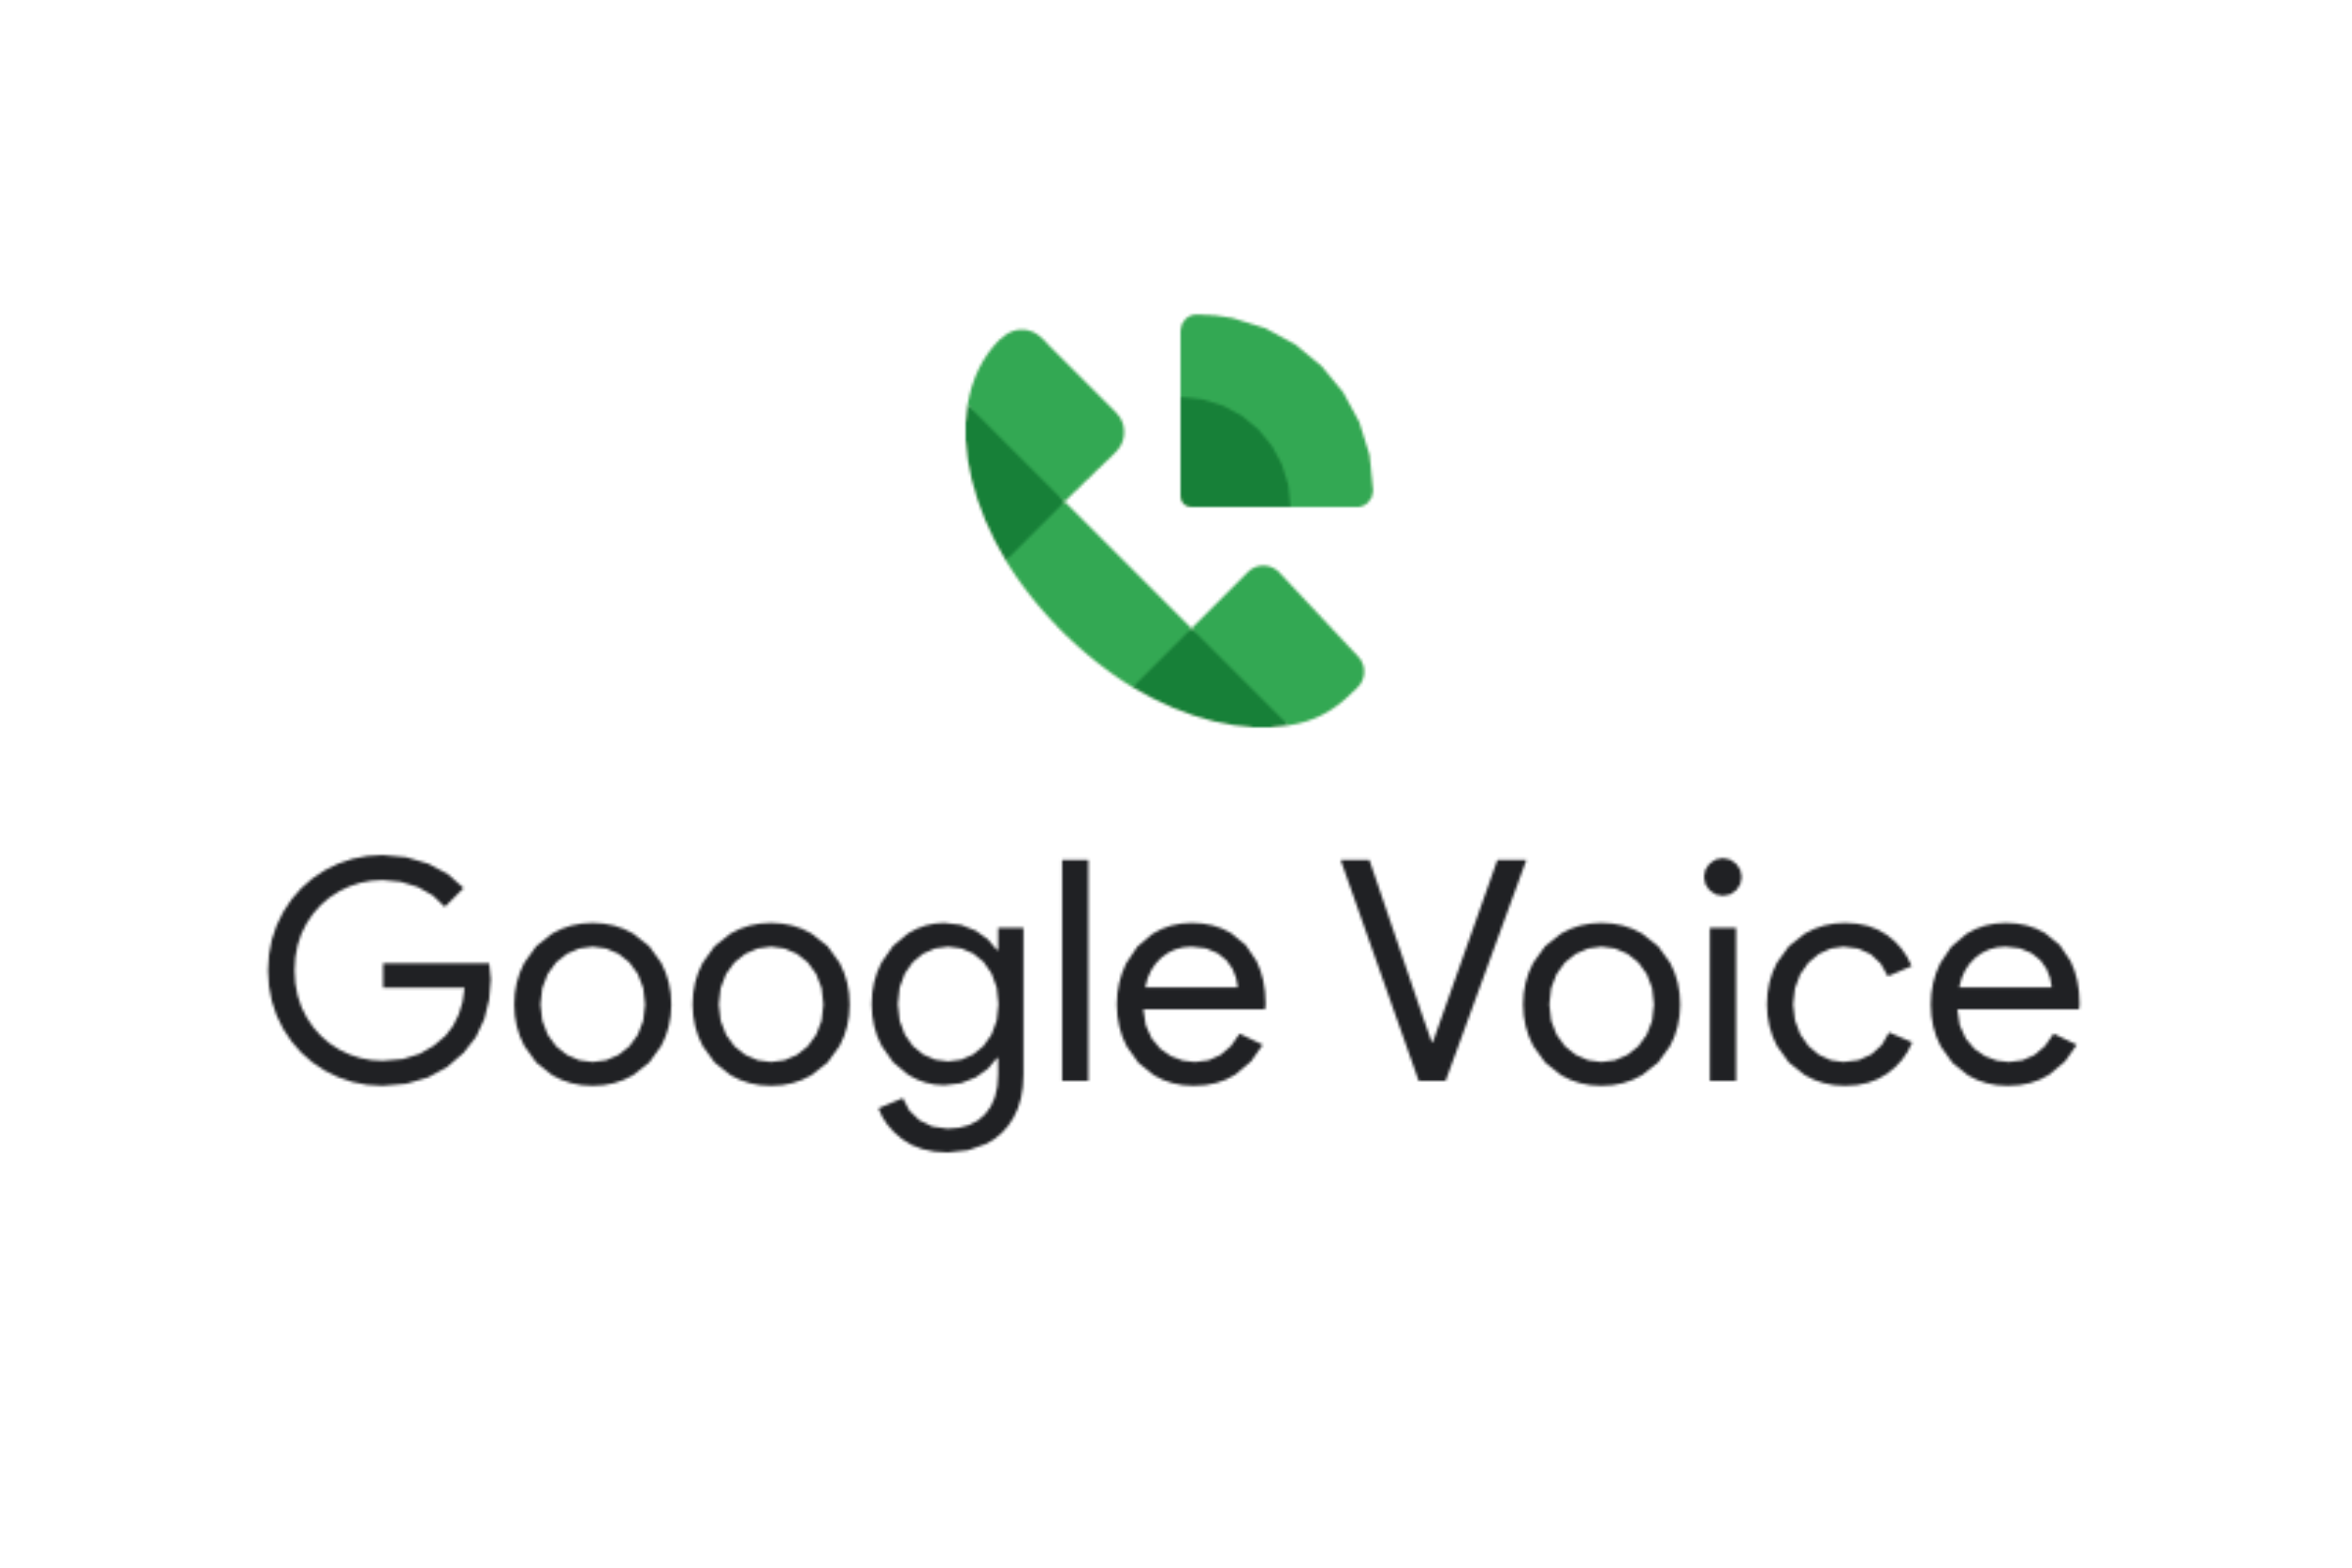 Google Voice logo on white background